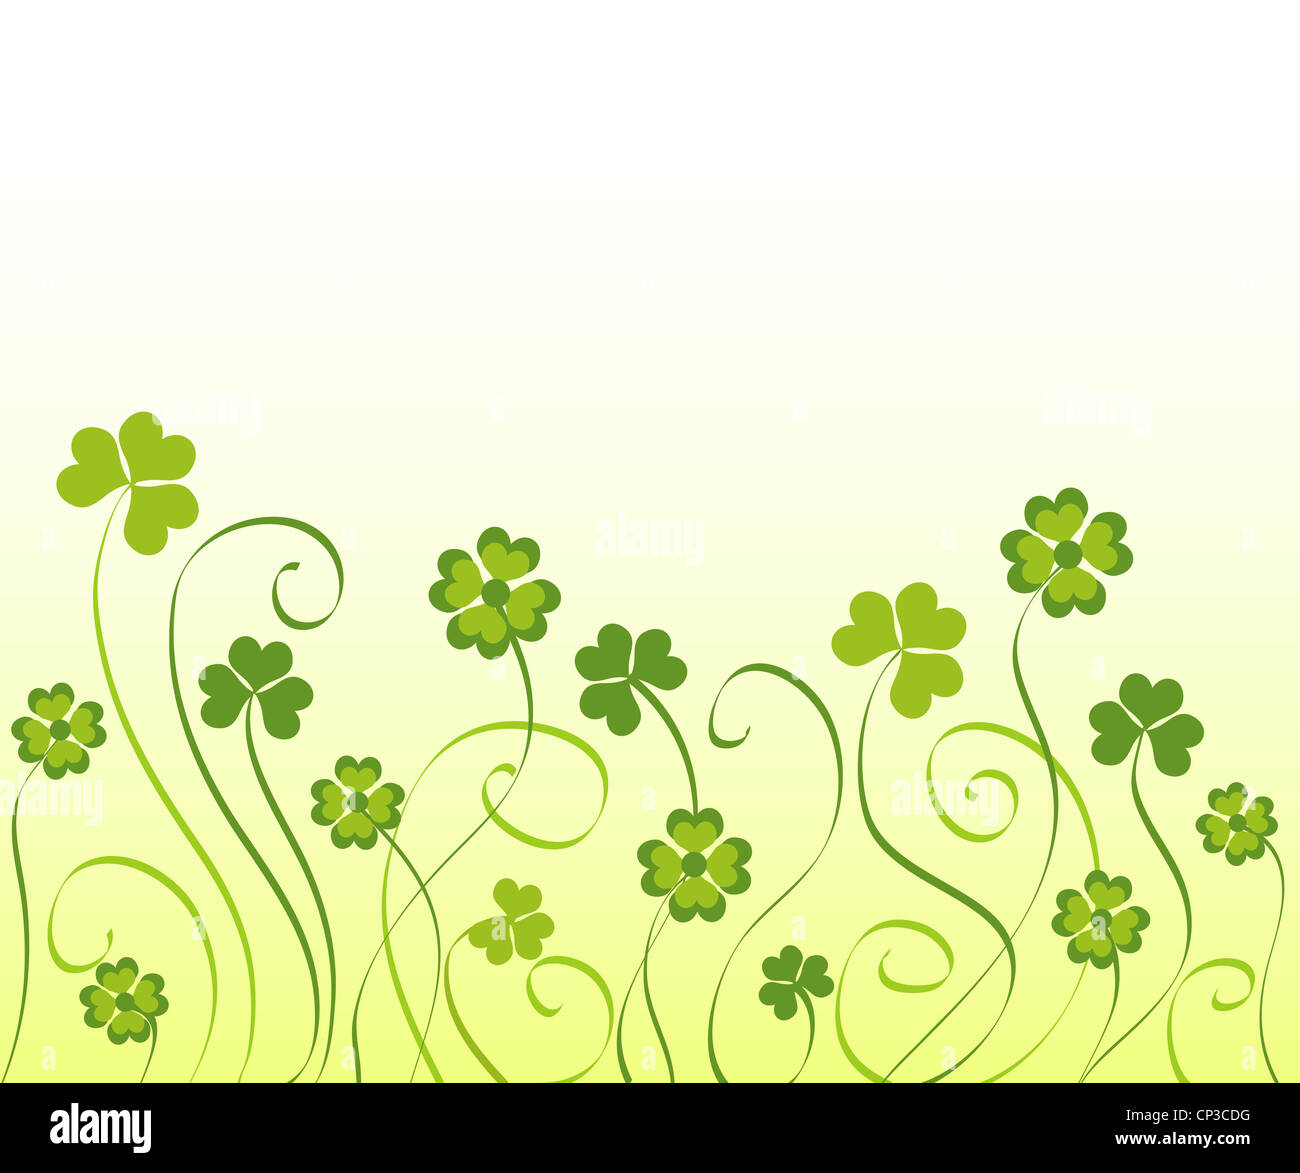 Green lucky shamrocks and clovers design Stock Photo